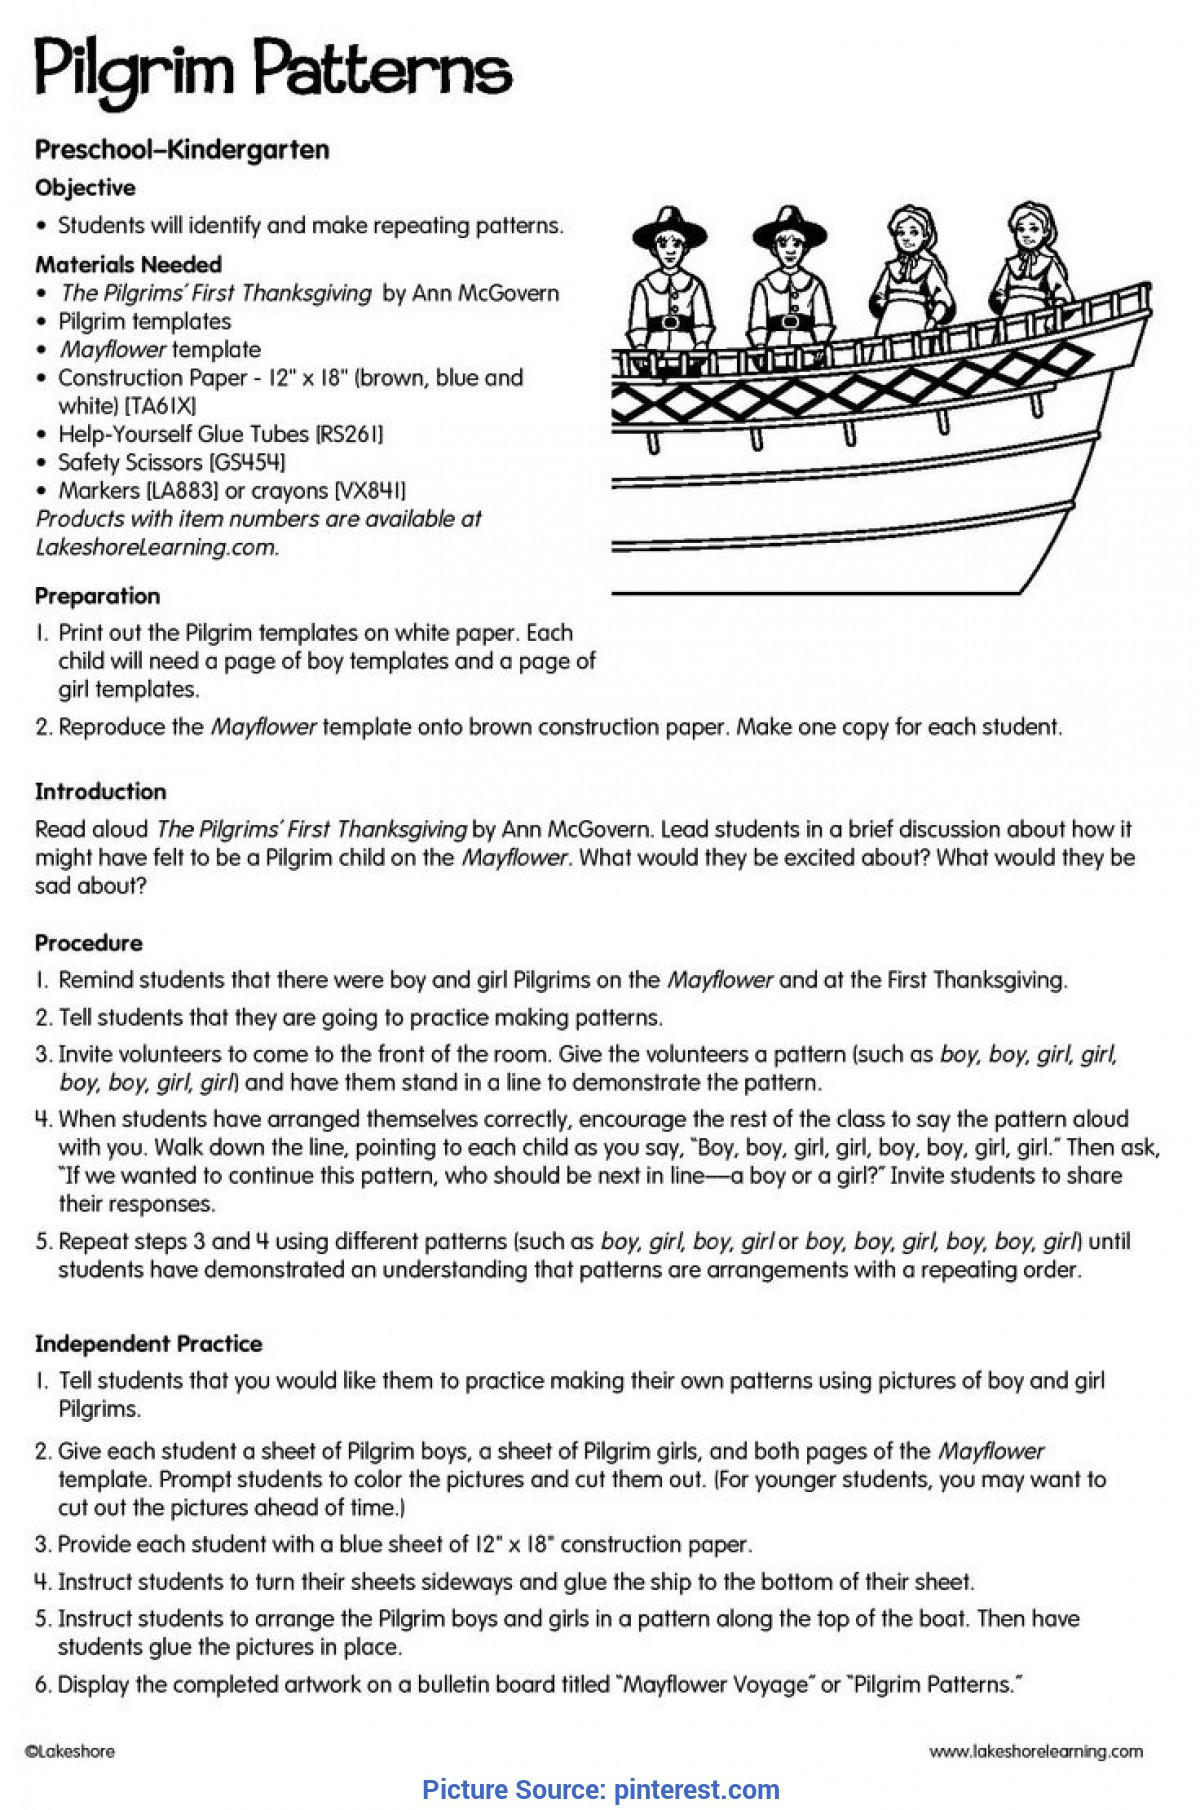 Thanksgiving Lesson Plans for Preschool Simple Lesson Plans for Preschool About Thanksgiving 51